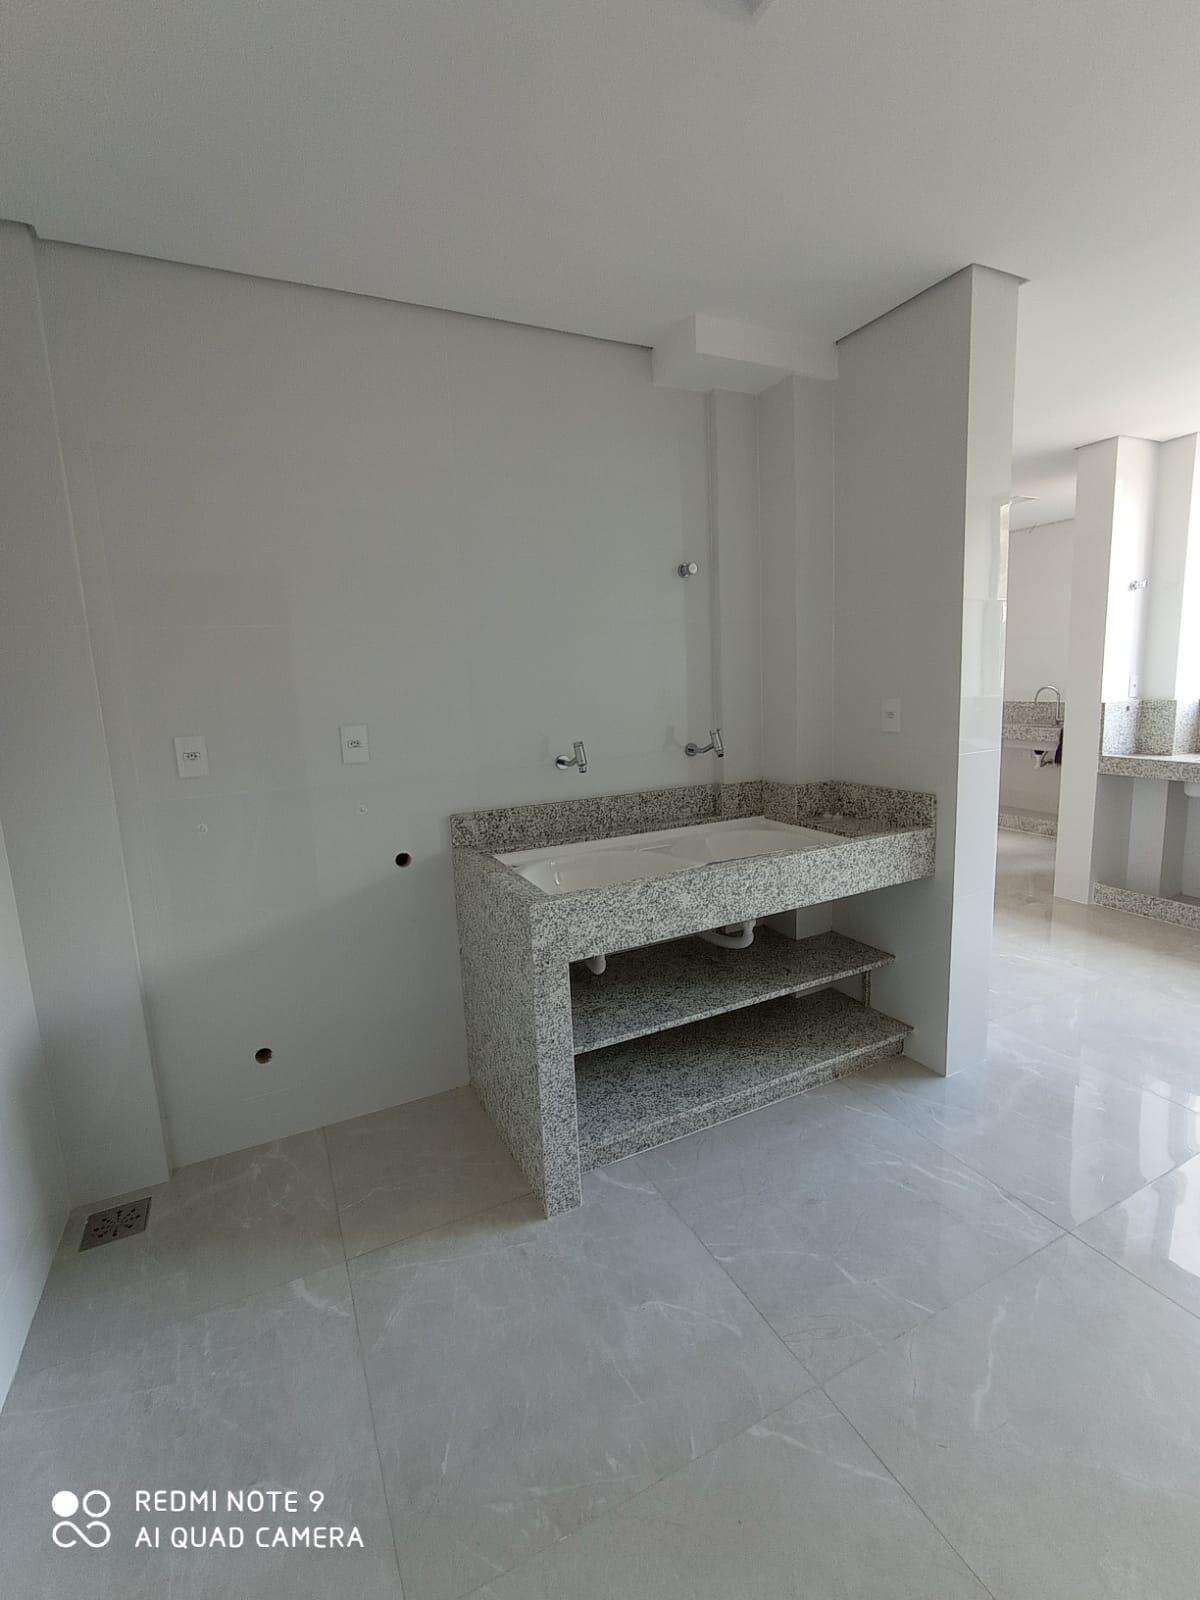 Apartamento 3 quartos para aluguel no Rafael José de Lima: dde1813c-7-whatsapp-image-2023-06-05-at-12.52.01.jpeg